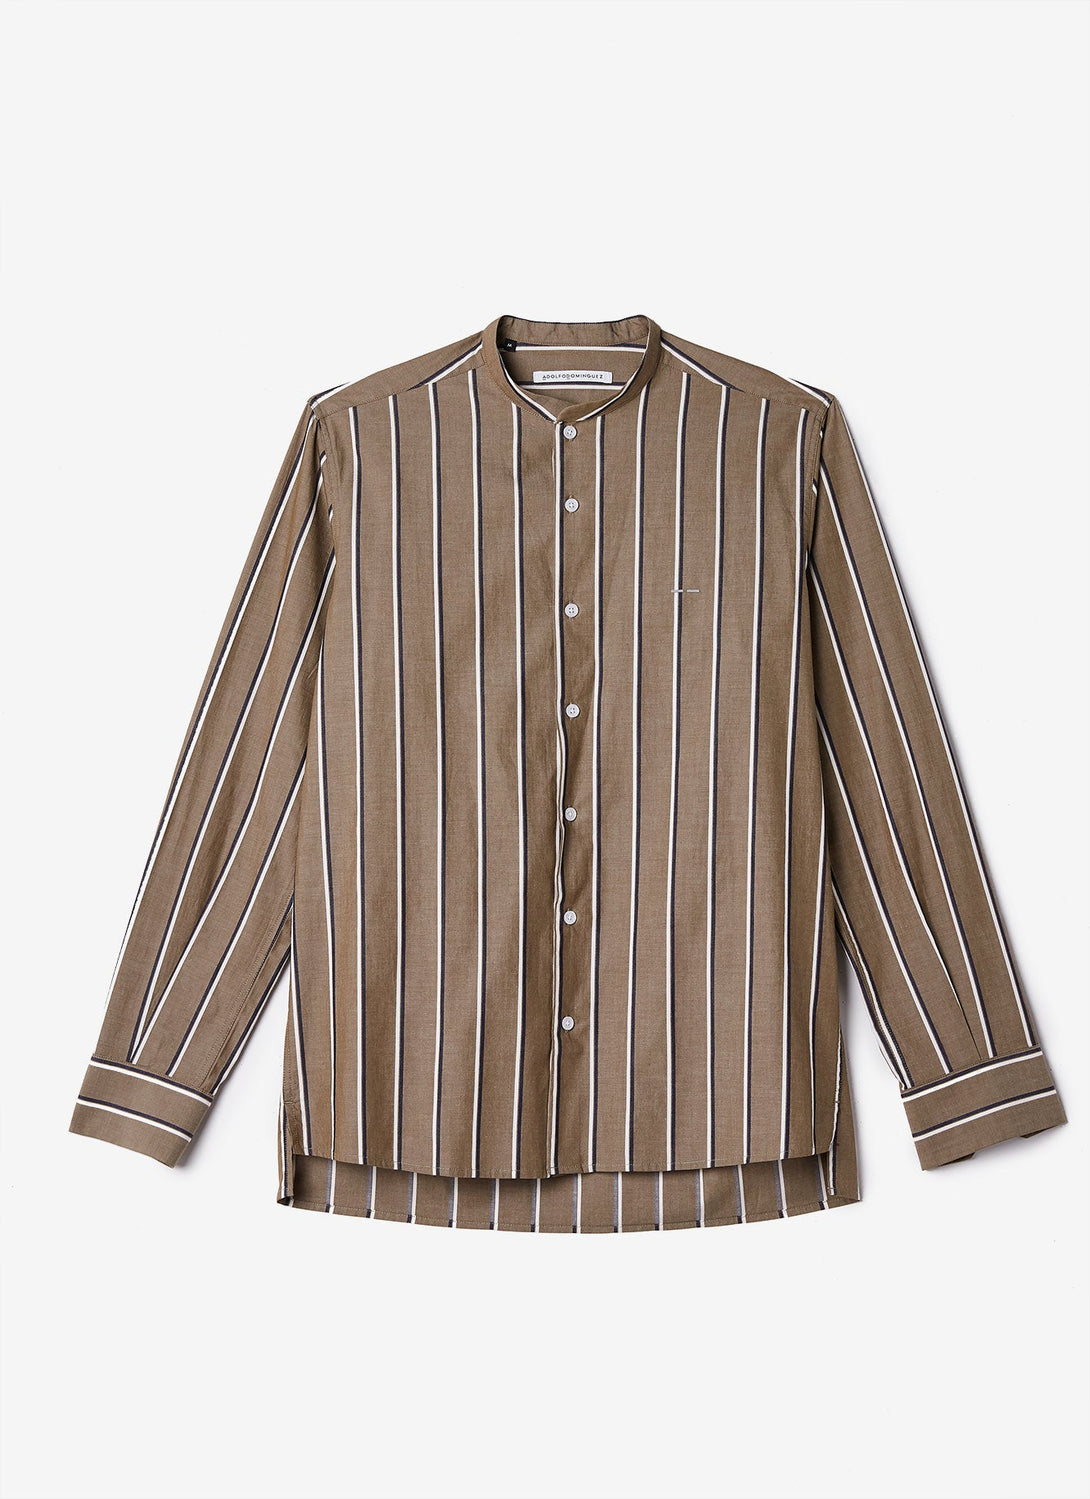 Men Shirt | Ike Green Mandarin Collar Cotton Shirt by Spanish designer Adolfo Dominguez